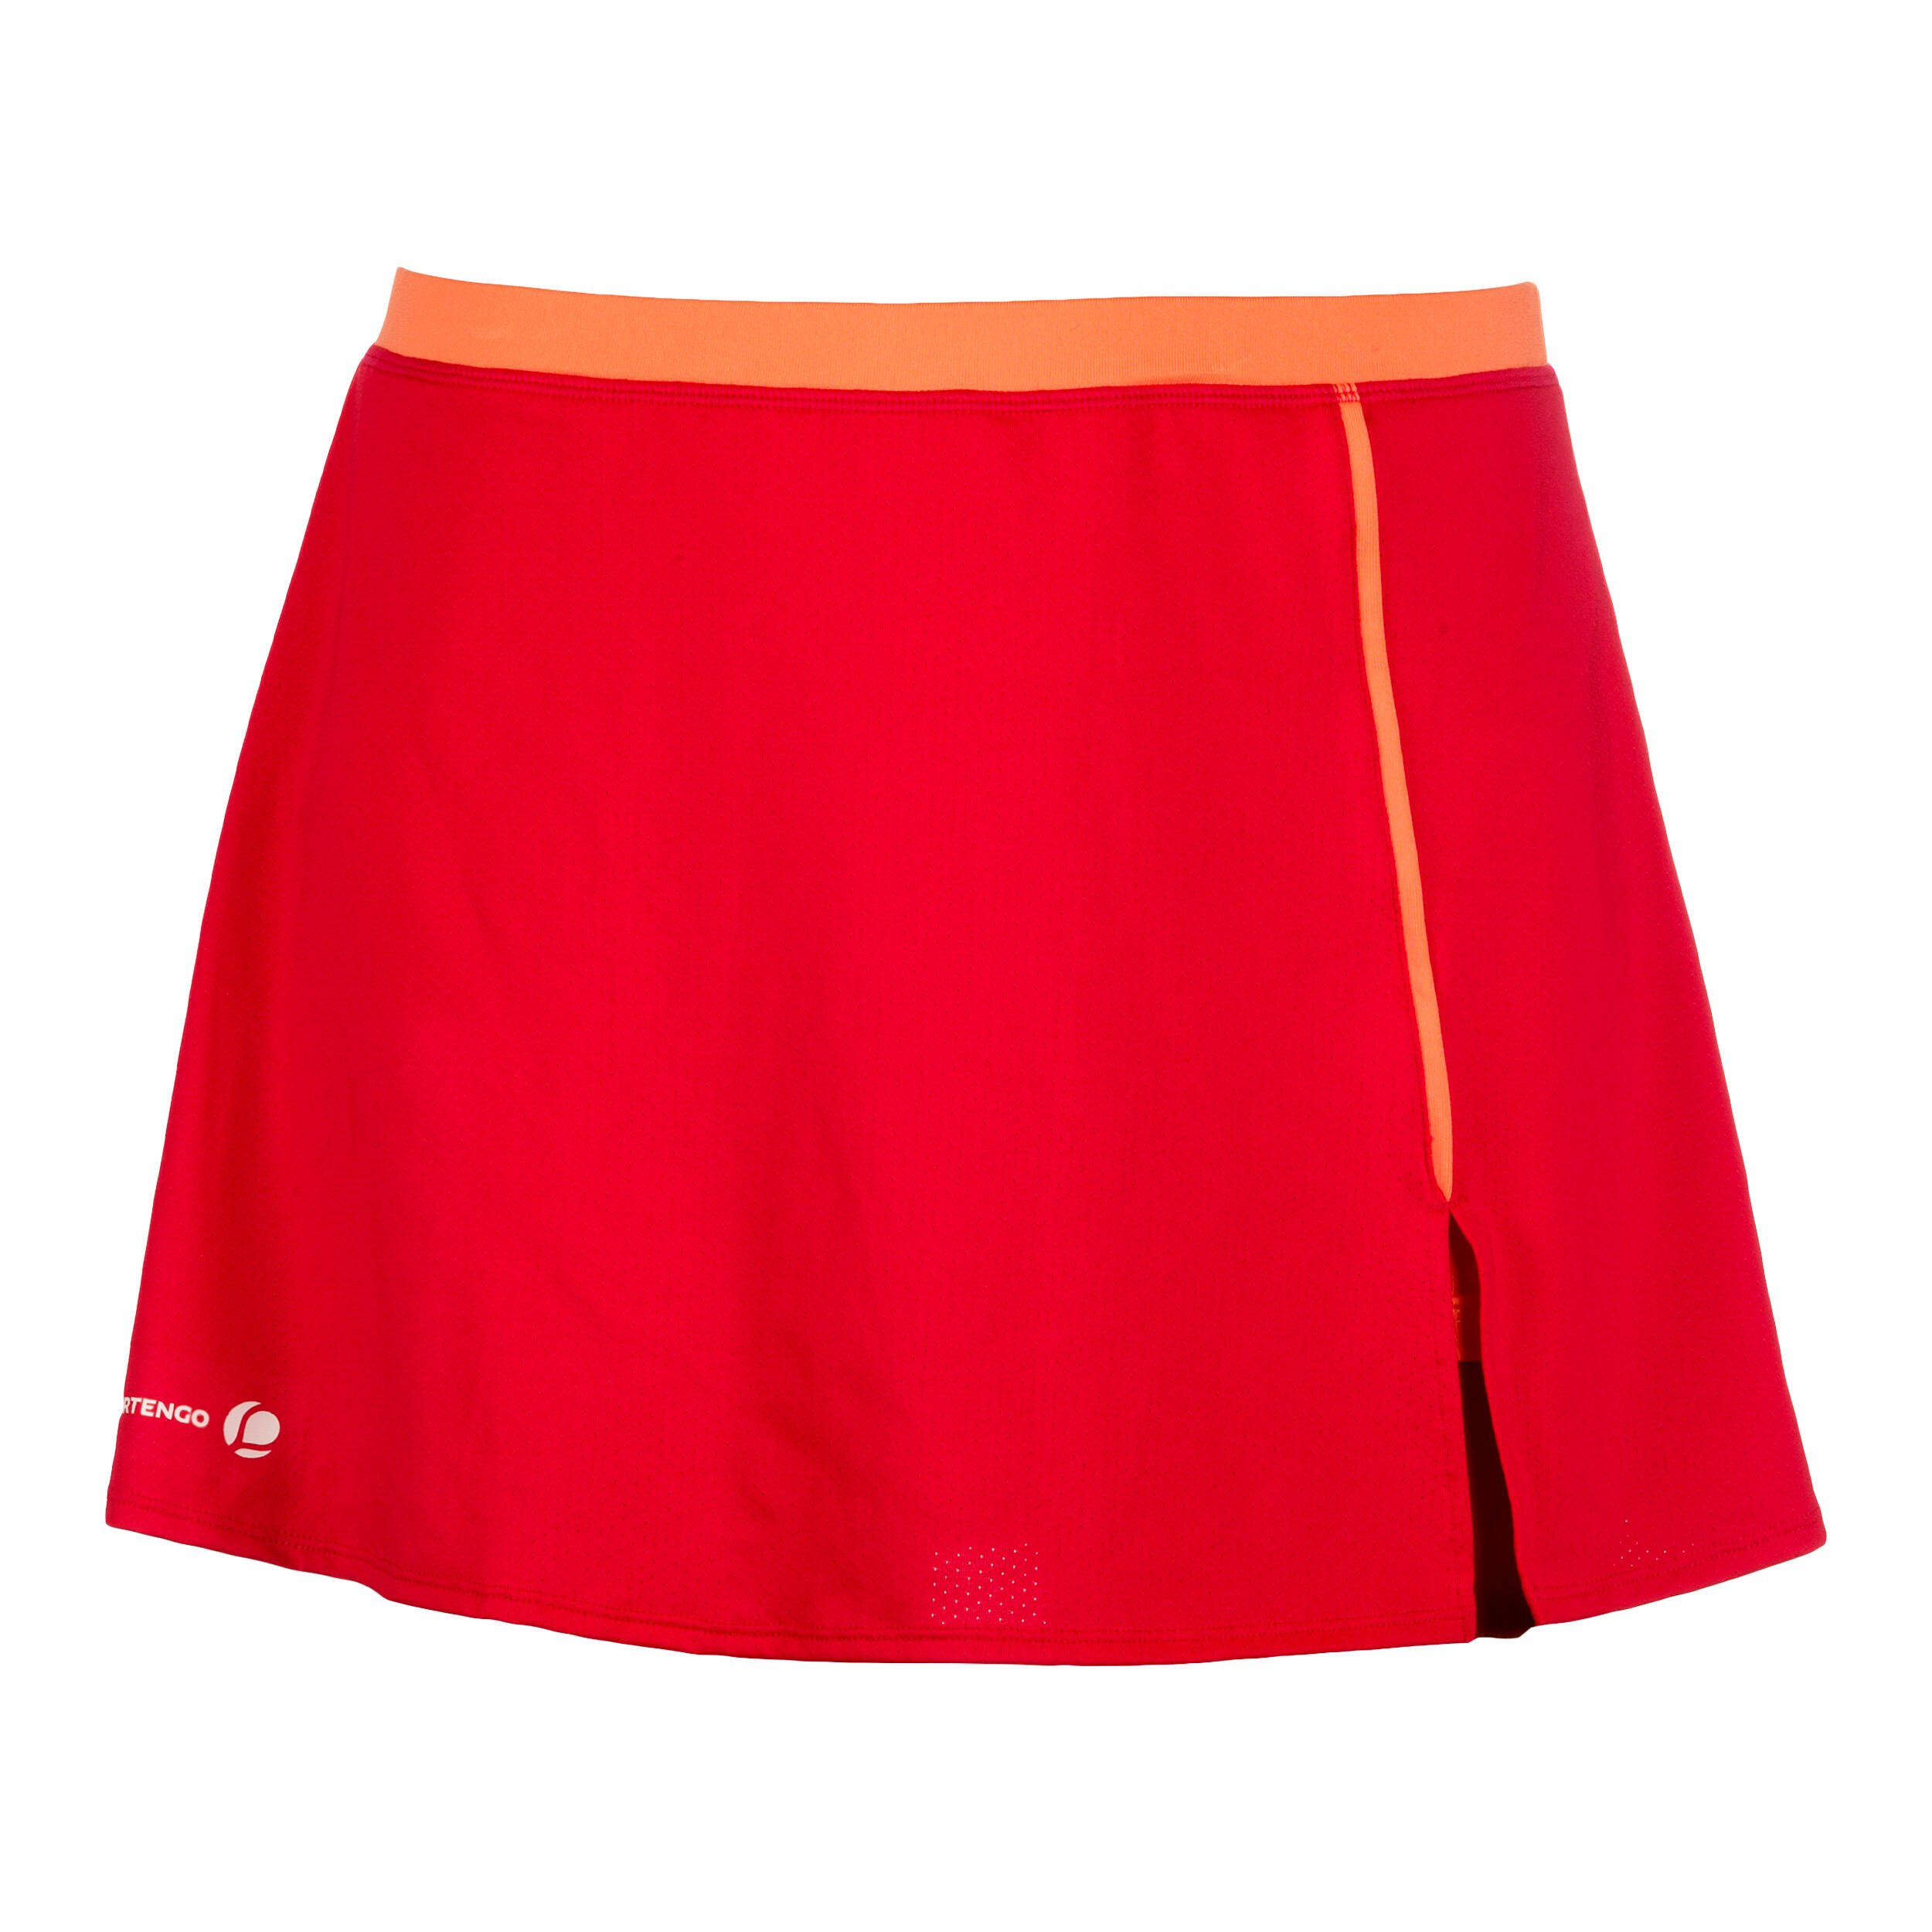 Soft Women's Tennis Badminton Table Tennis Squash Padel Skirt - Pink/Orange 6/6